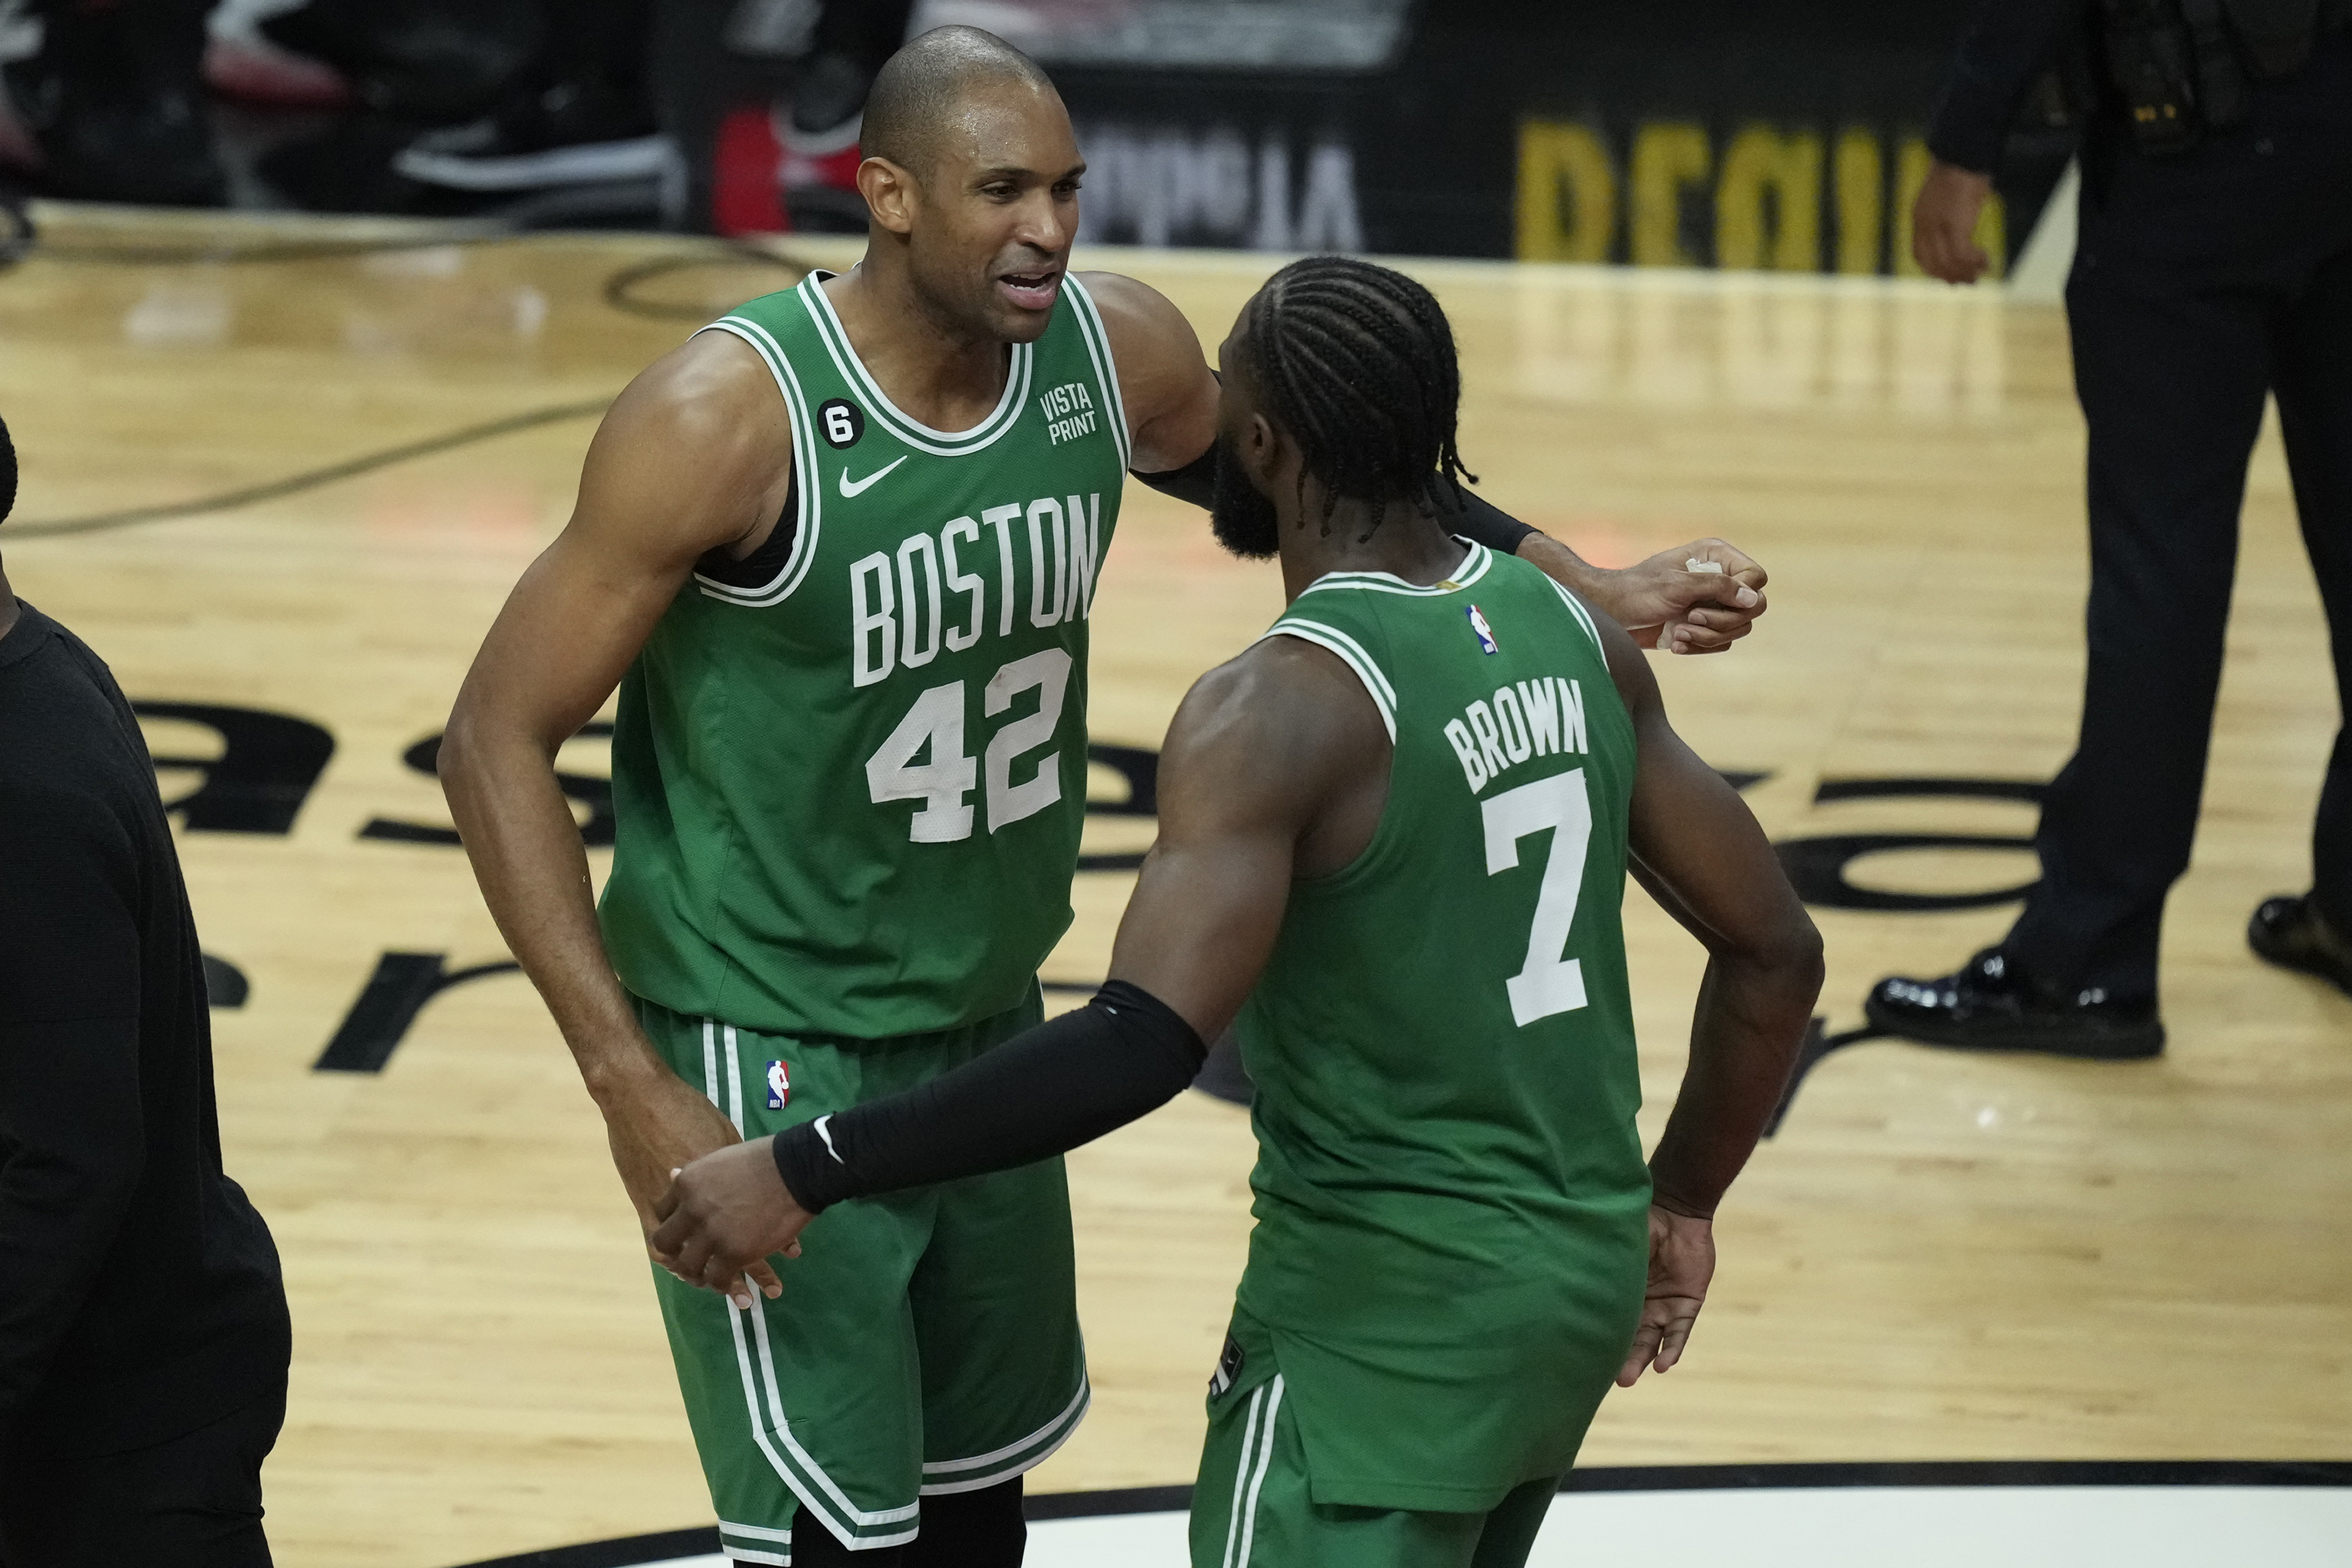 Boston Celtics Dresses for Sale